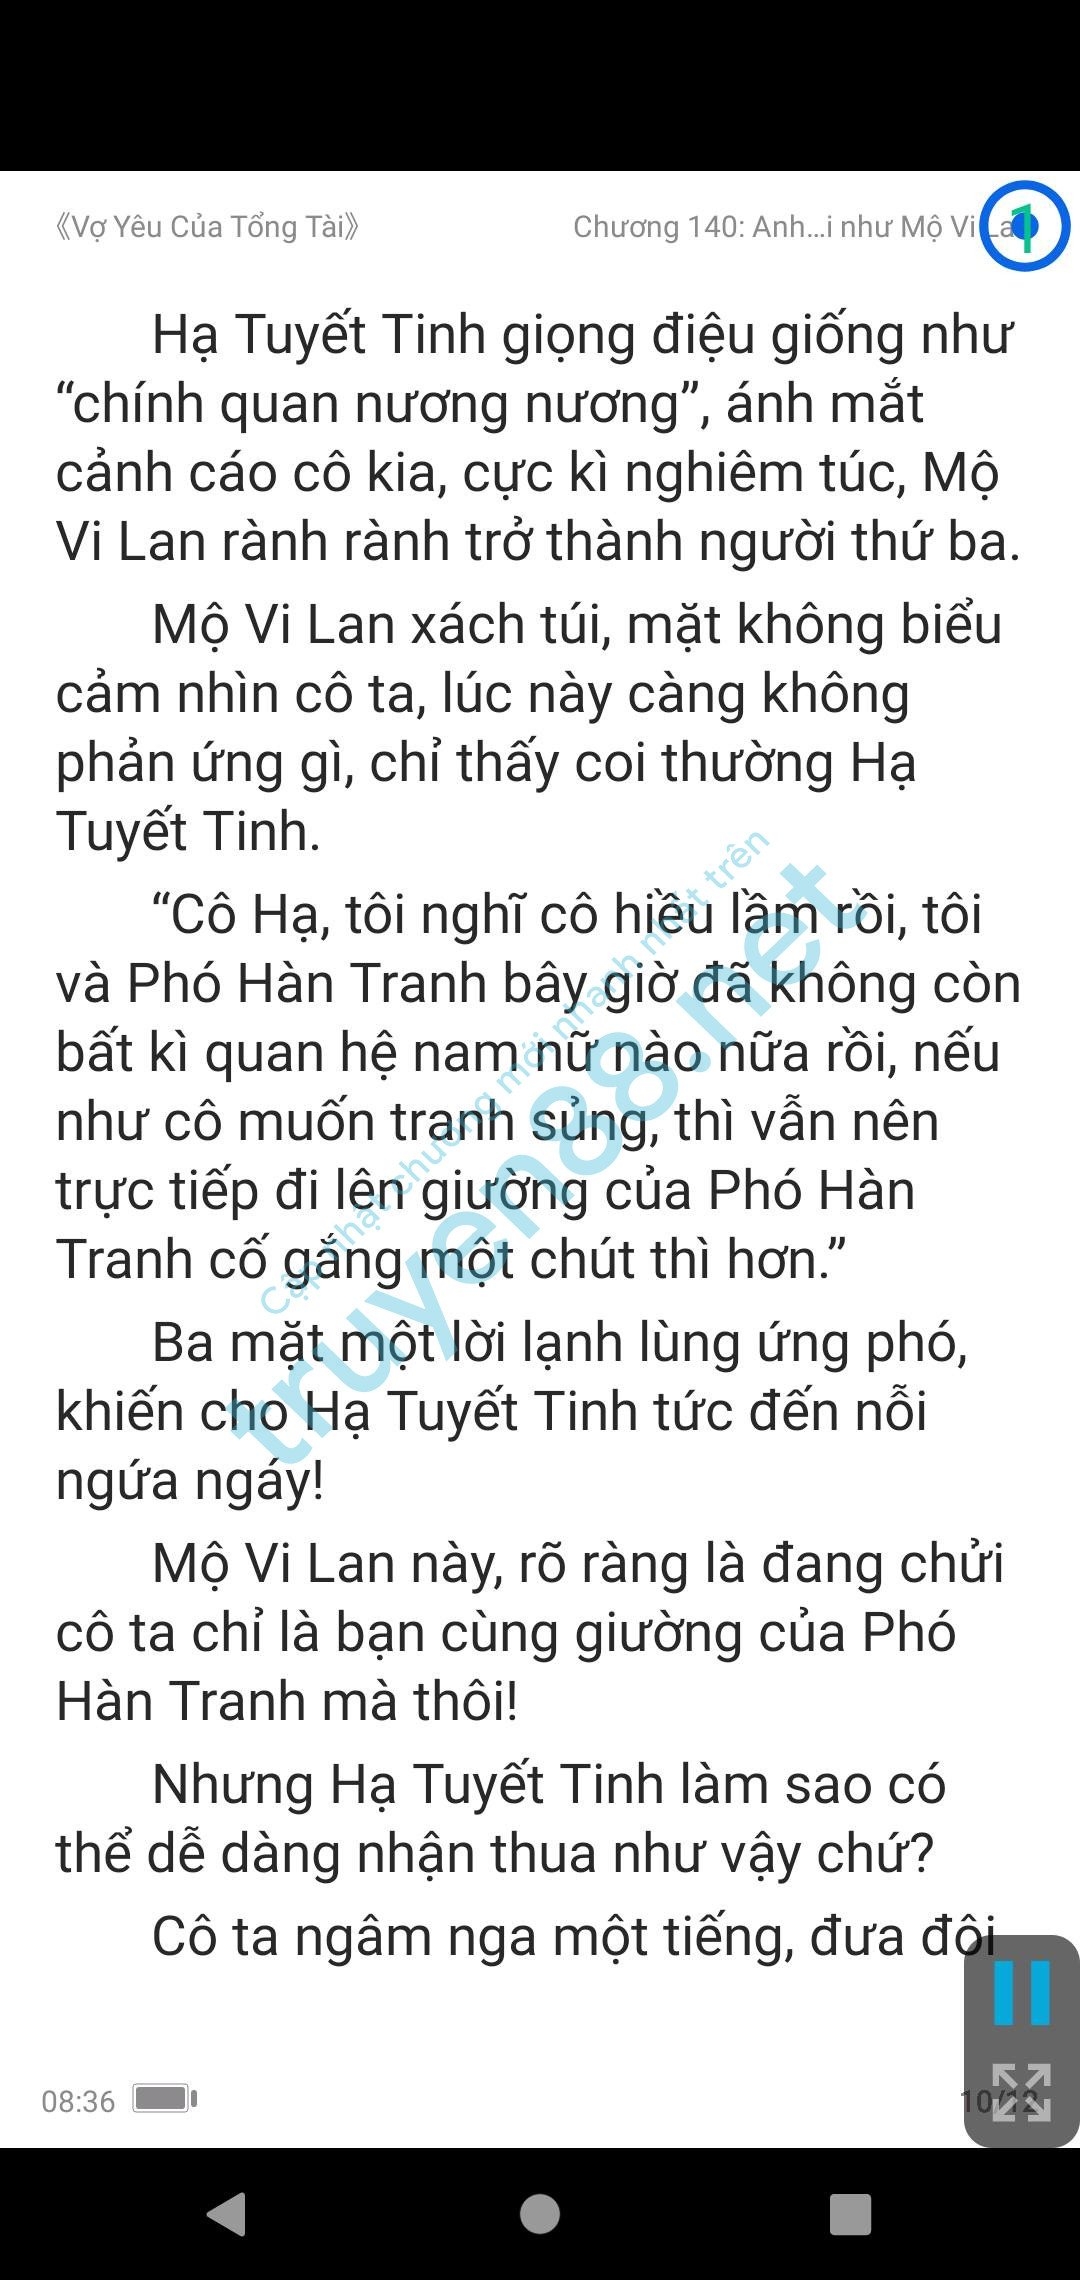 vo-yeu-cua-tong-tai-mo-vi-lan--pho-han-tranh-140-1